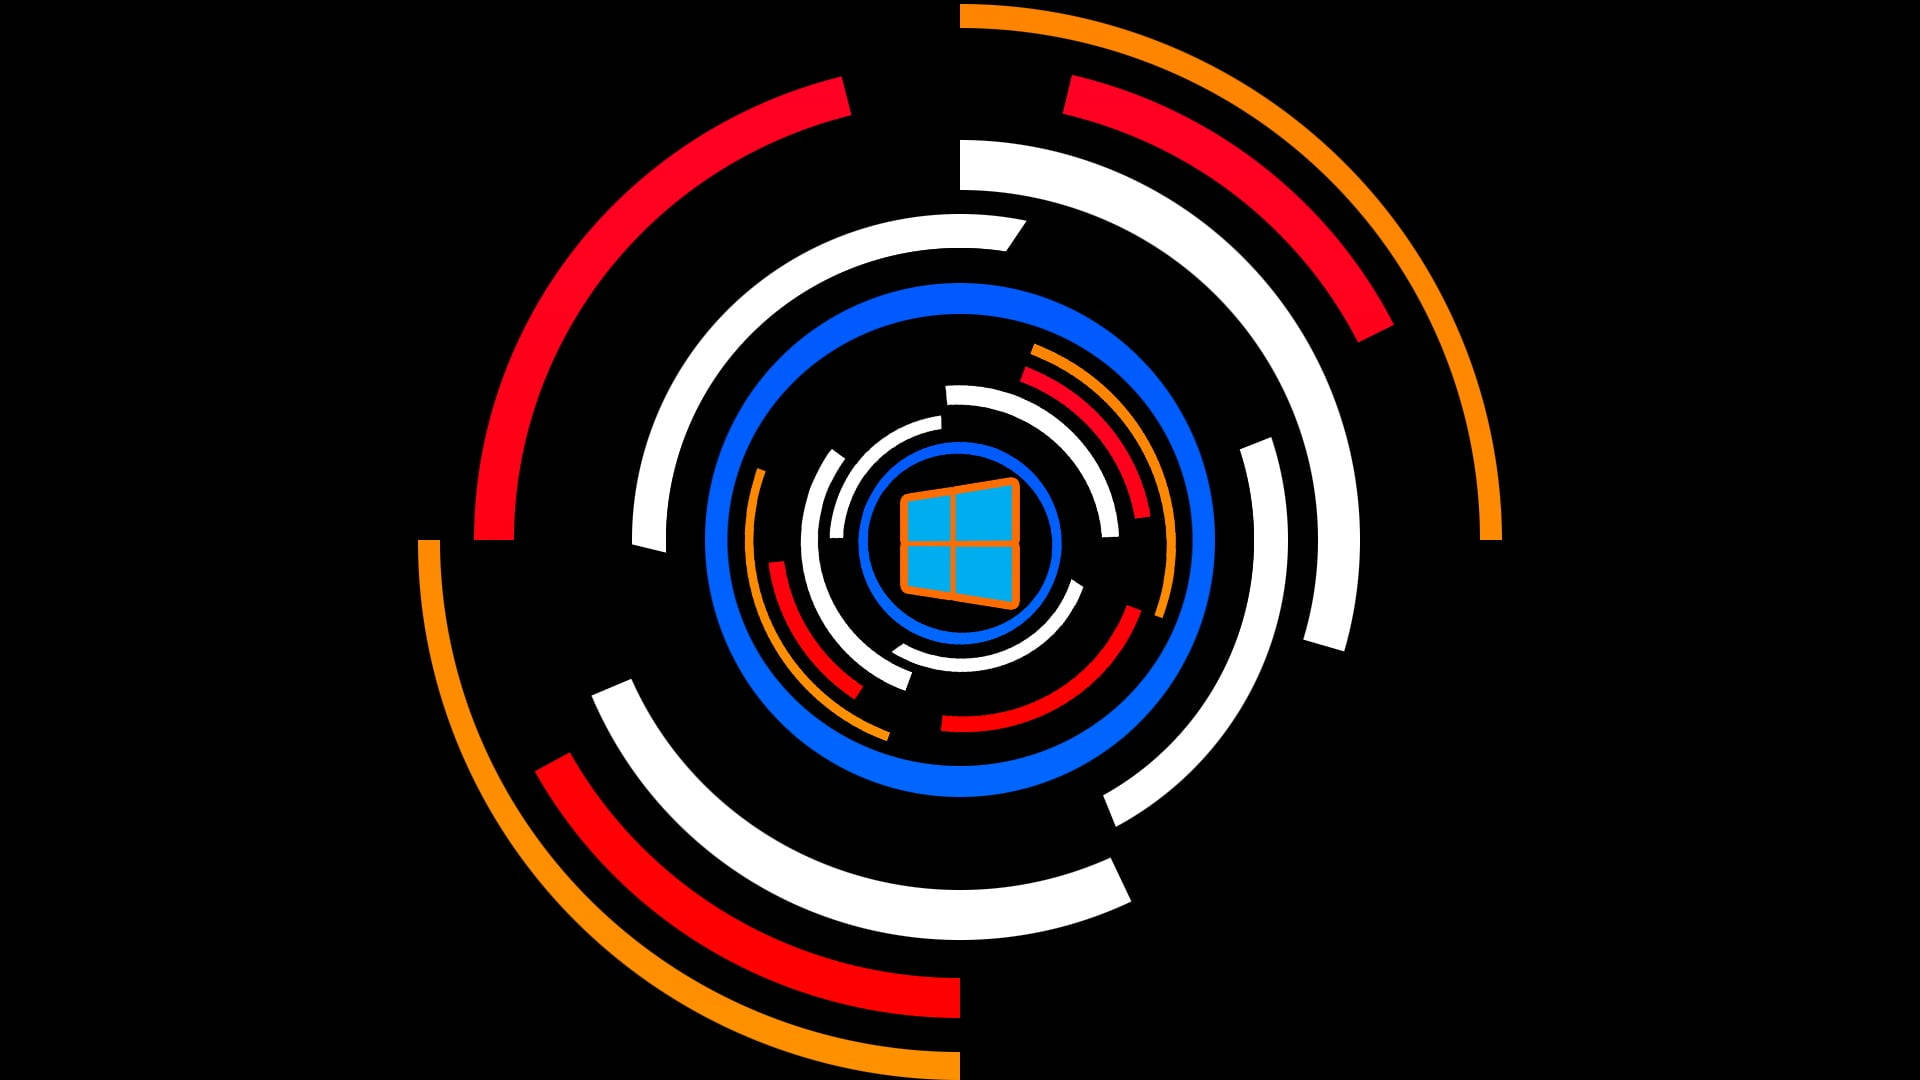 Windows Techno Logo Wallpaper